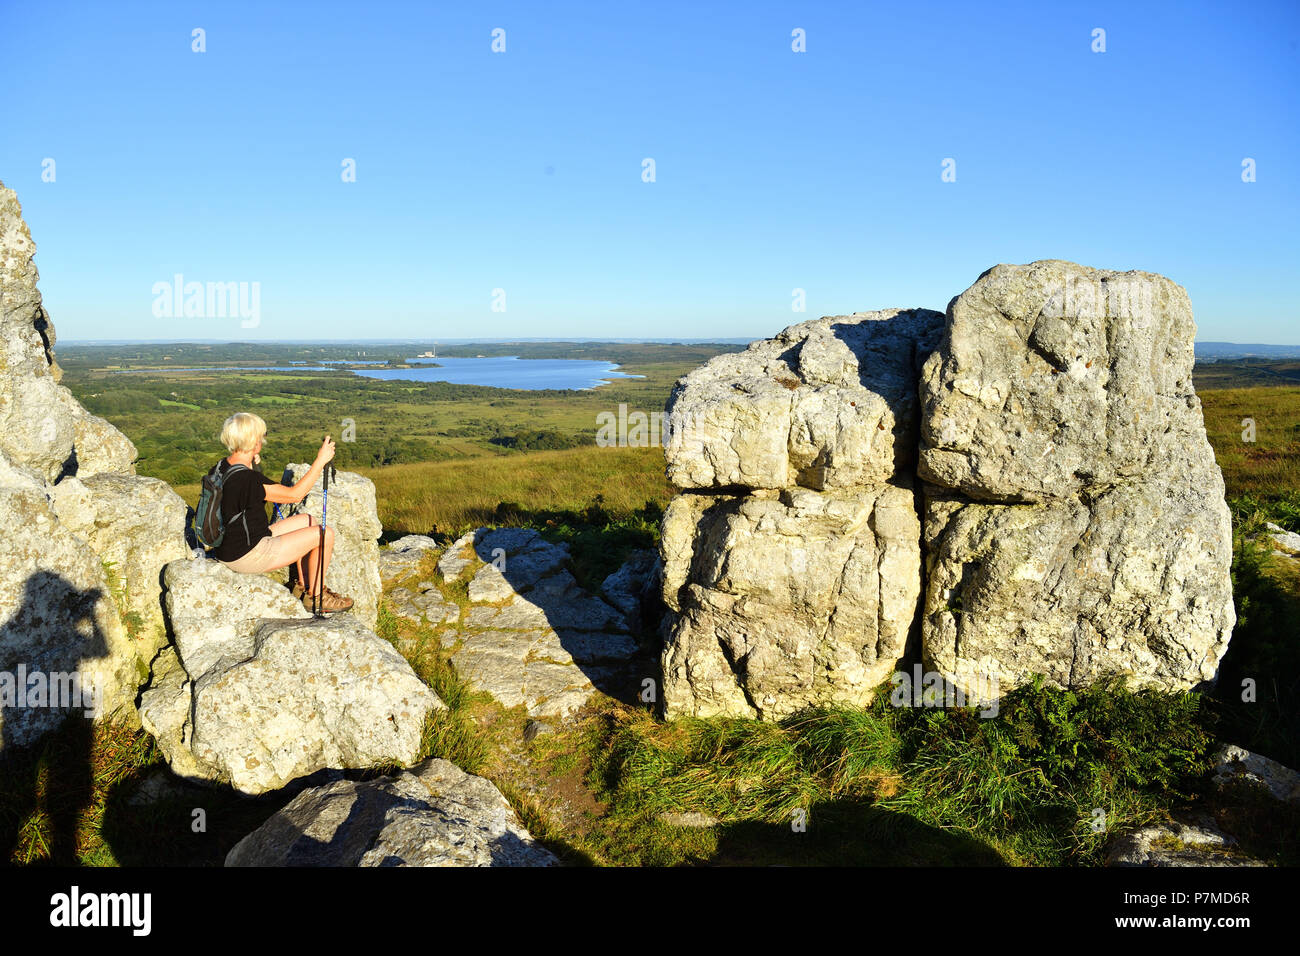 Frankreich, Finistere, Parc Naturel Regional d'Armorique (Armorica Regionalen Naturpark), Saint Rivoal, Monts d'Arrée und einen Blick auf die brennilis See (Stausee St. Michel) Stockfoto